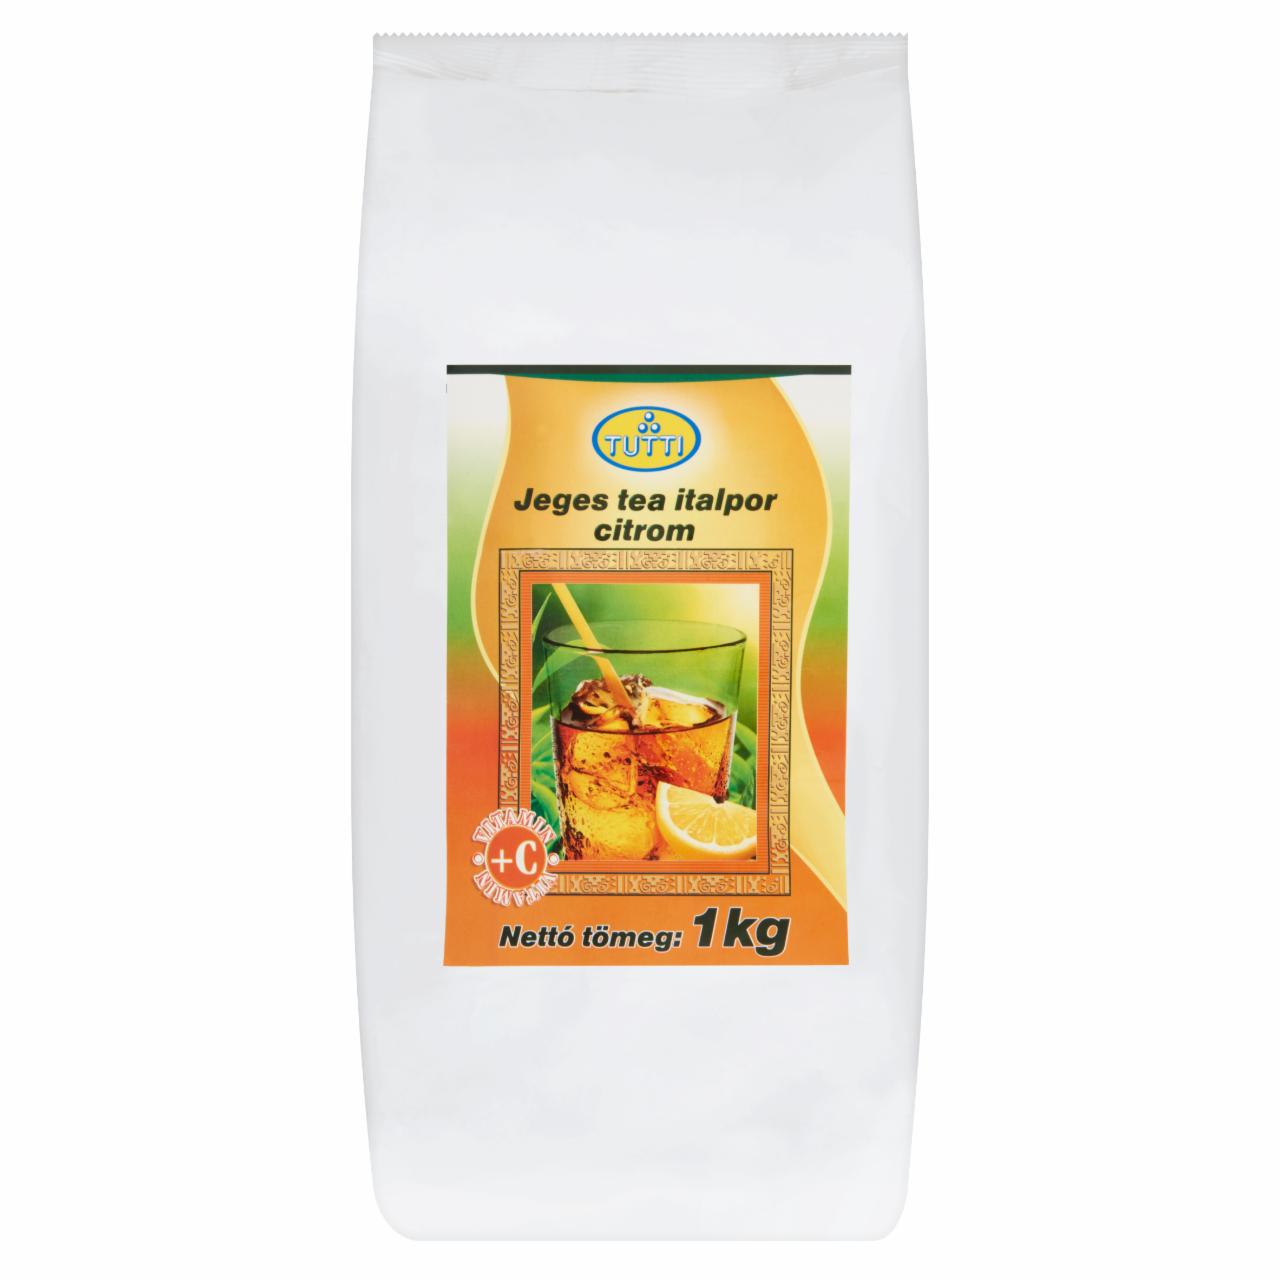 Képek - Tutti citrom jeges tea italpor 1 kg